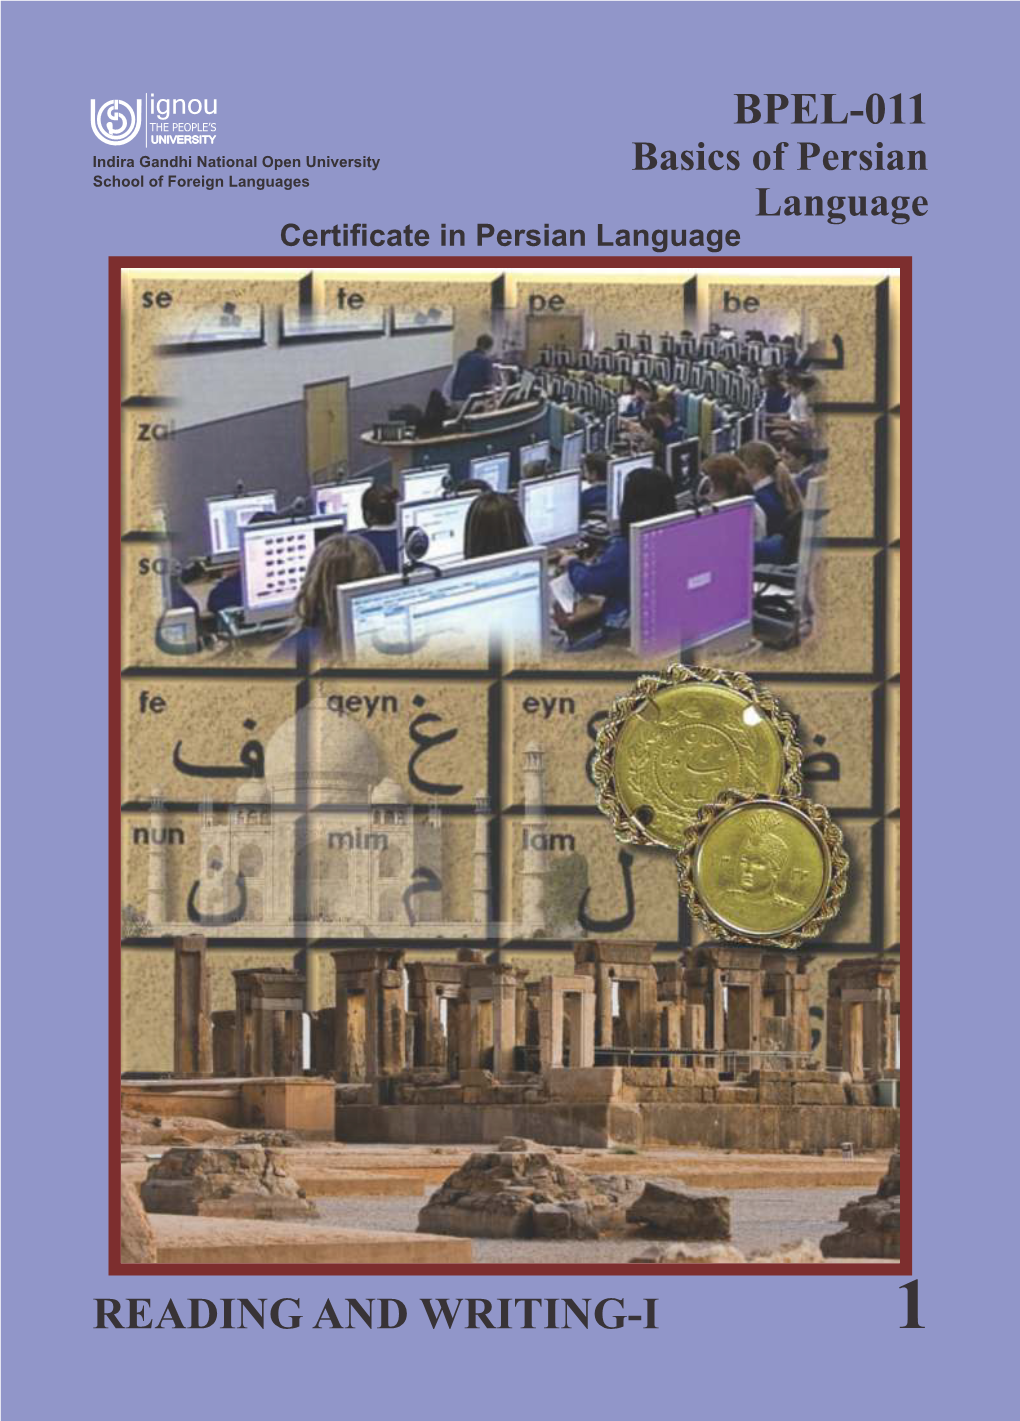 BPEL-011 Basics of Persian Language